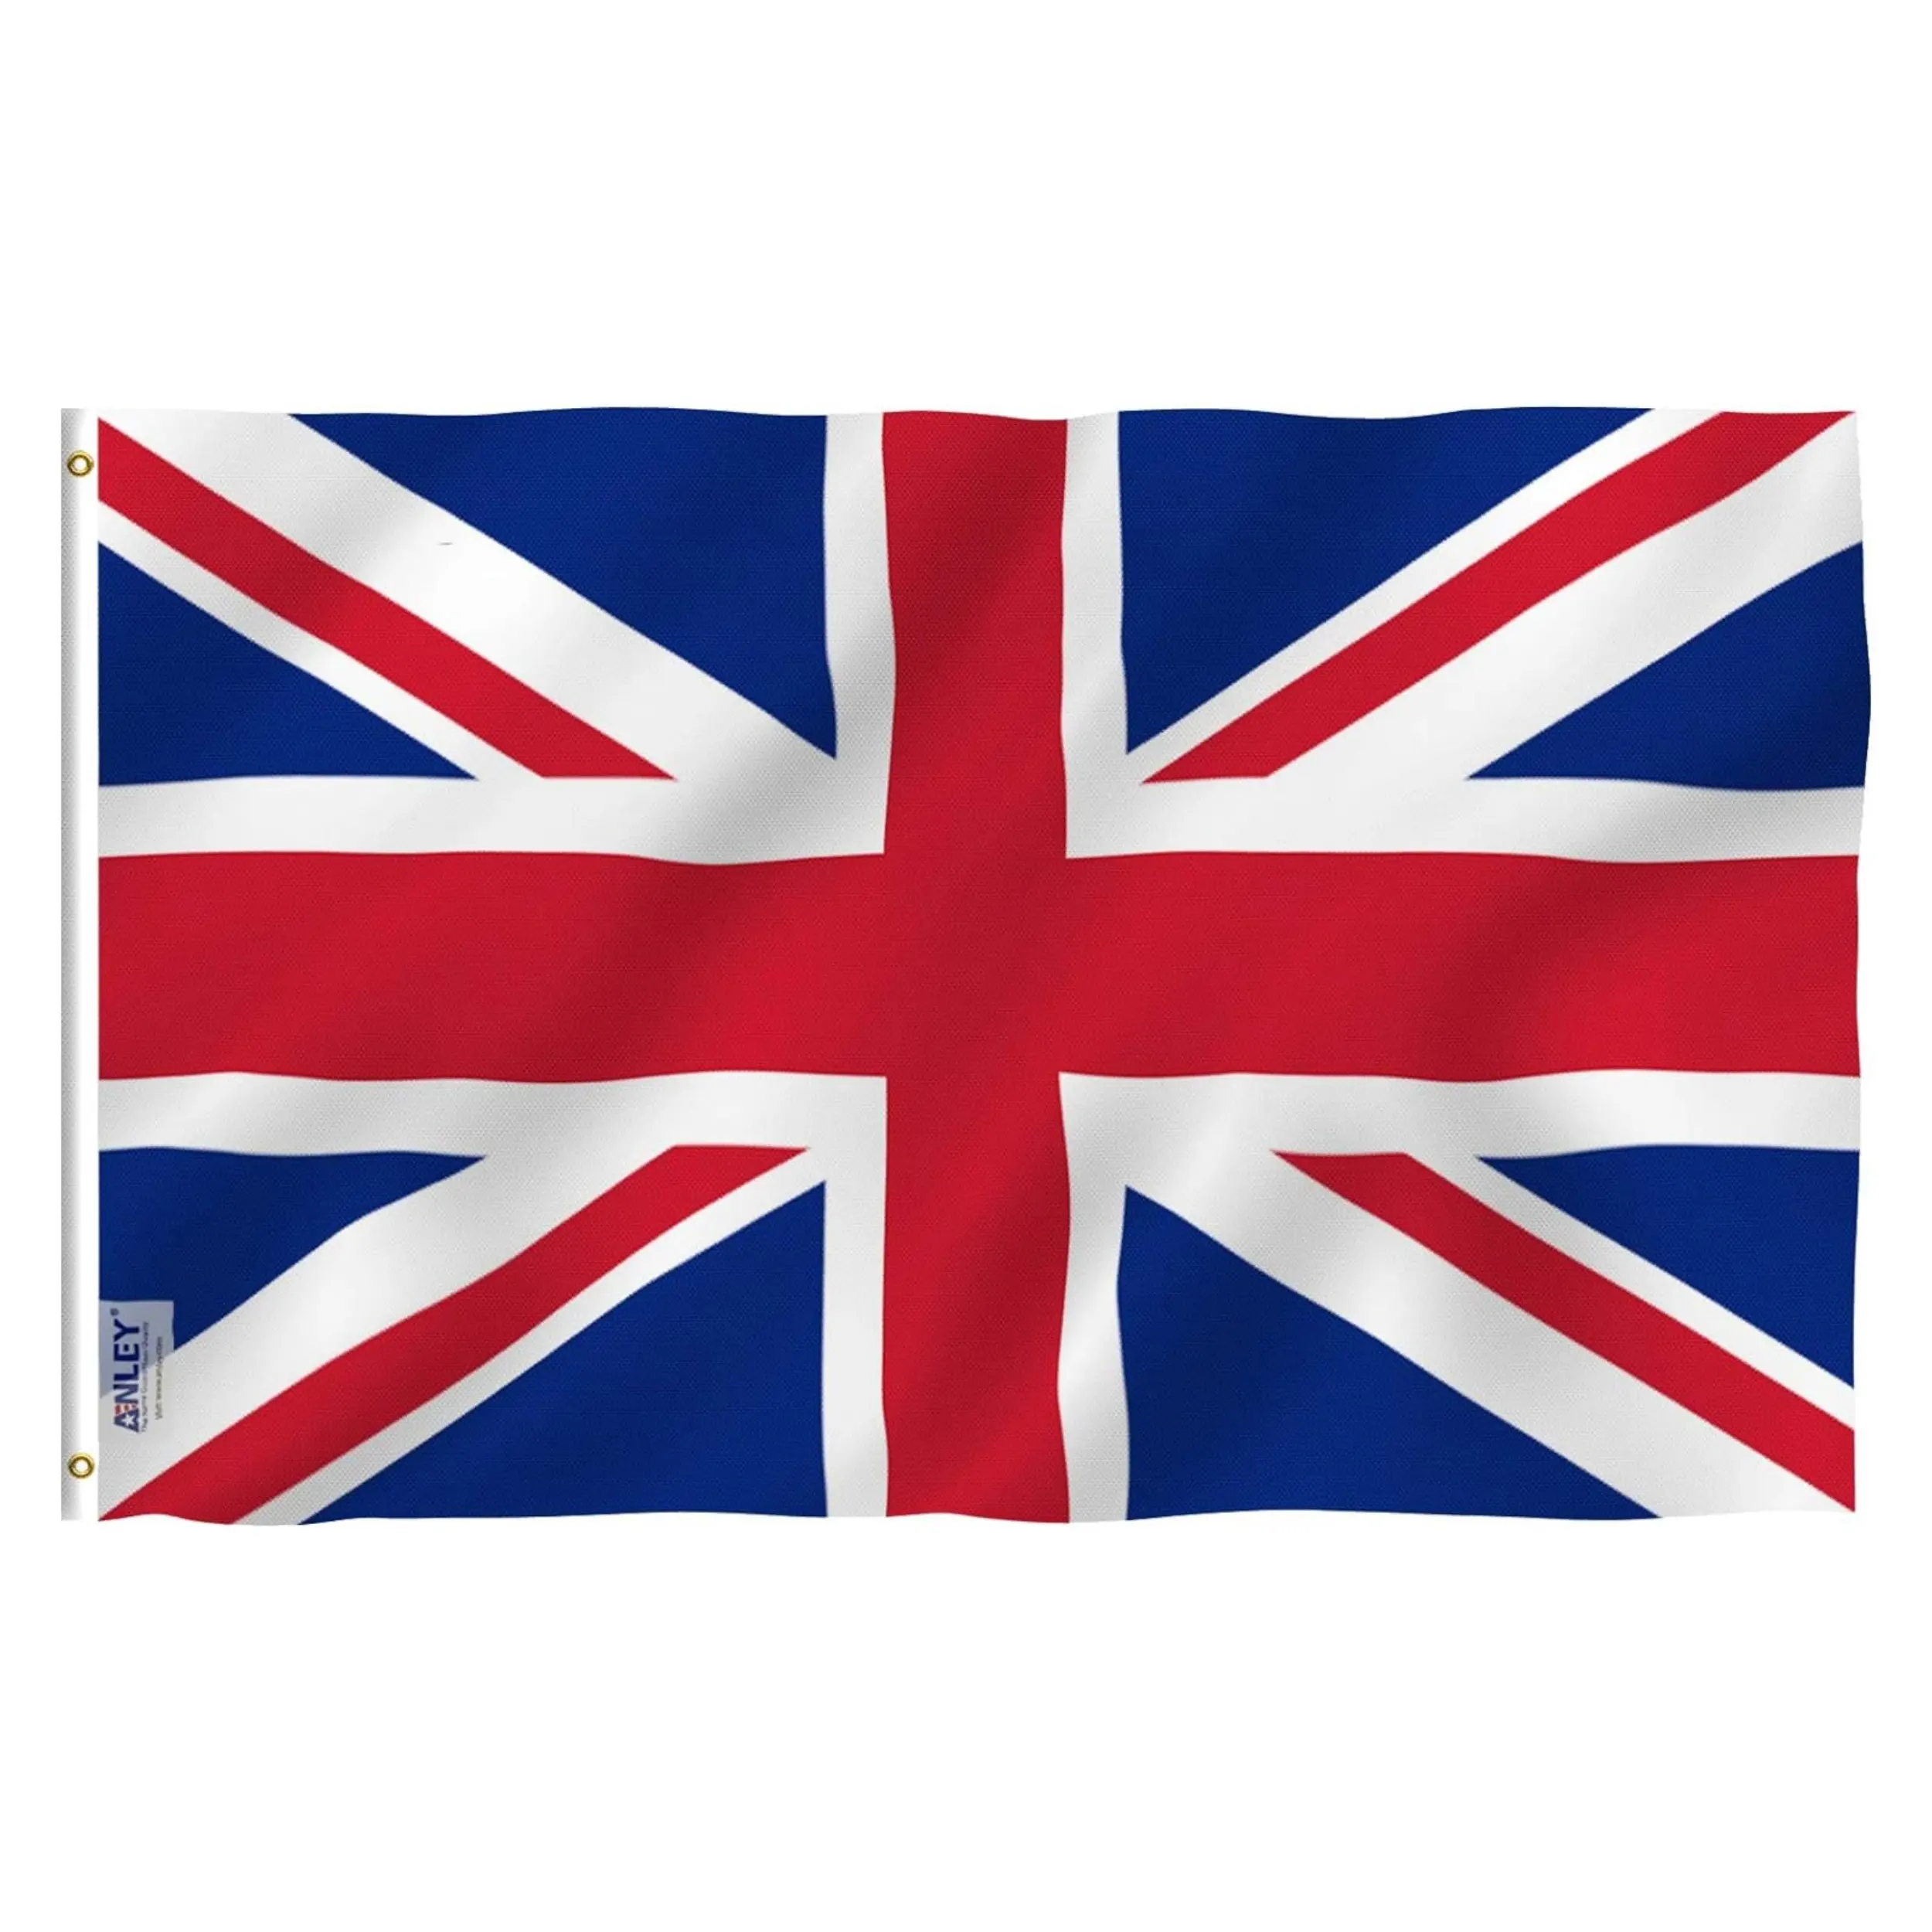 Bandeira Nacional 3x5 FT de Poliéster Reino Unido Bandeira Nacional Todos os Países Bandeira da Inglaterra Reino Unido Bandeira Britânica 3x5FT Union Jack